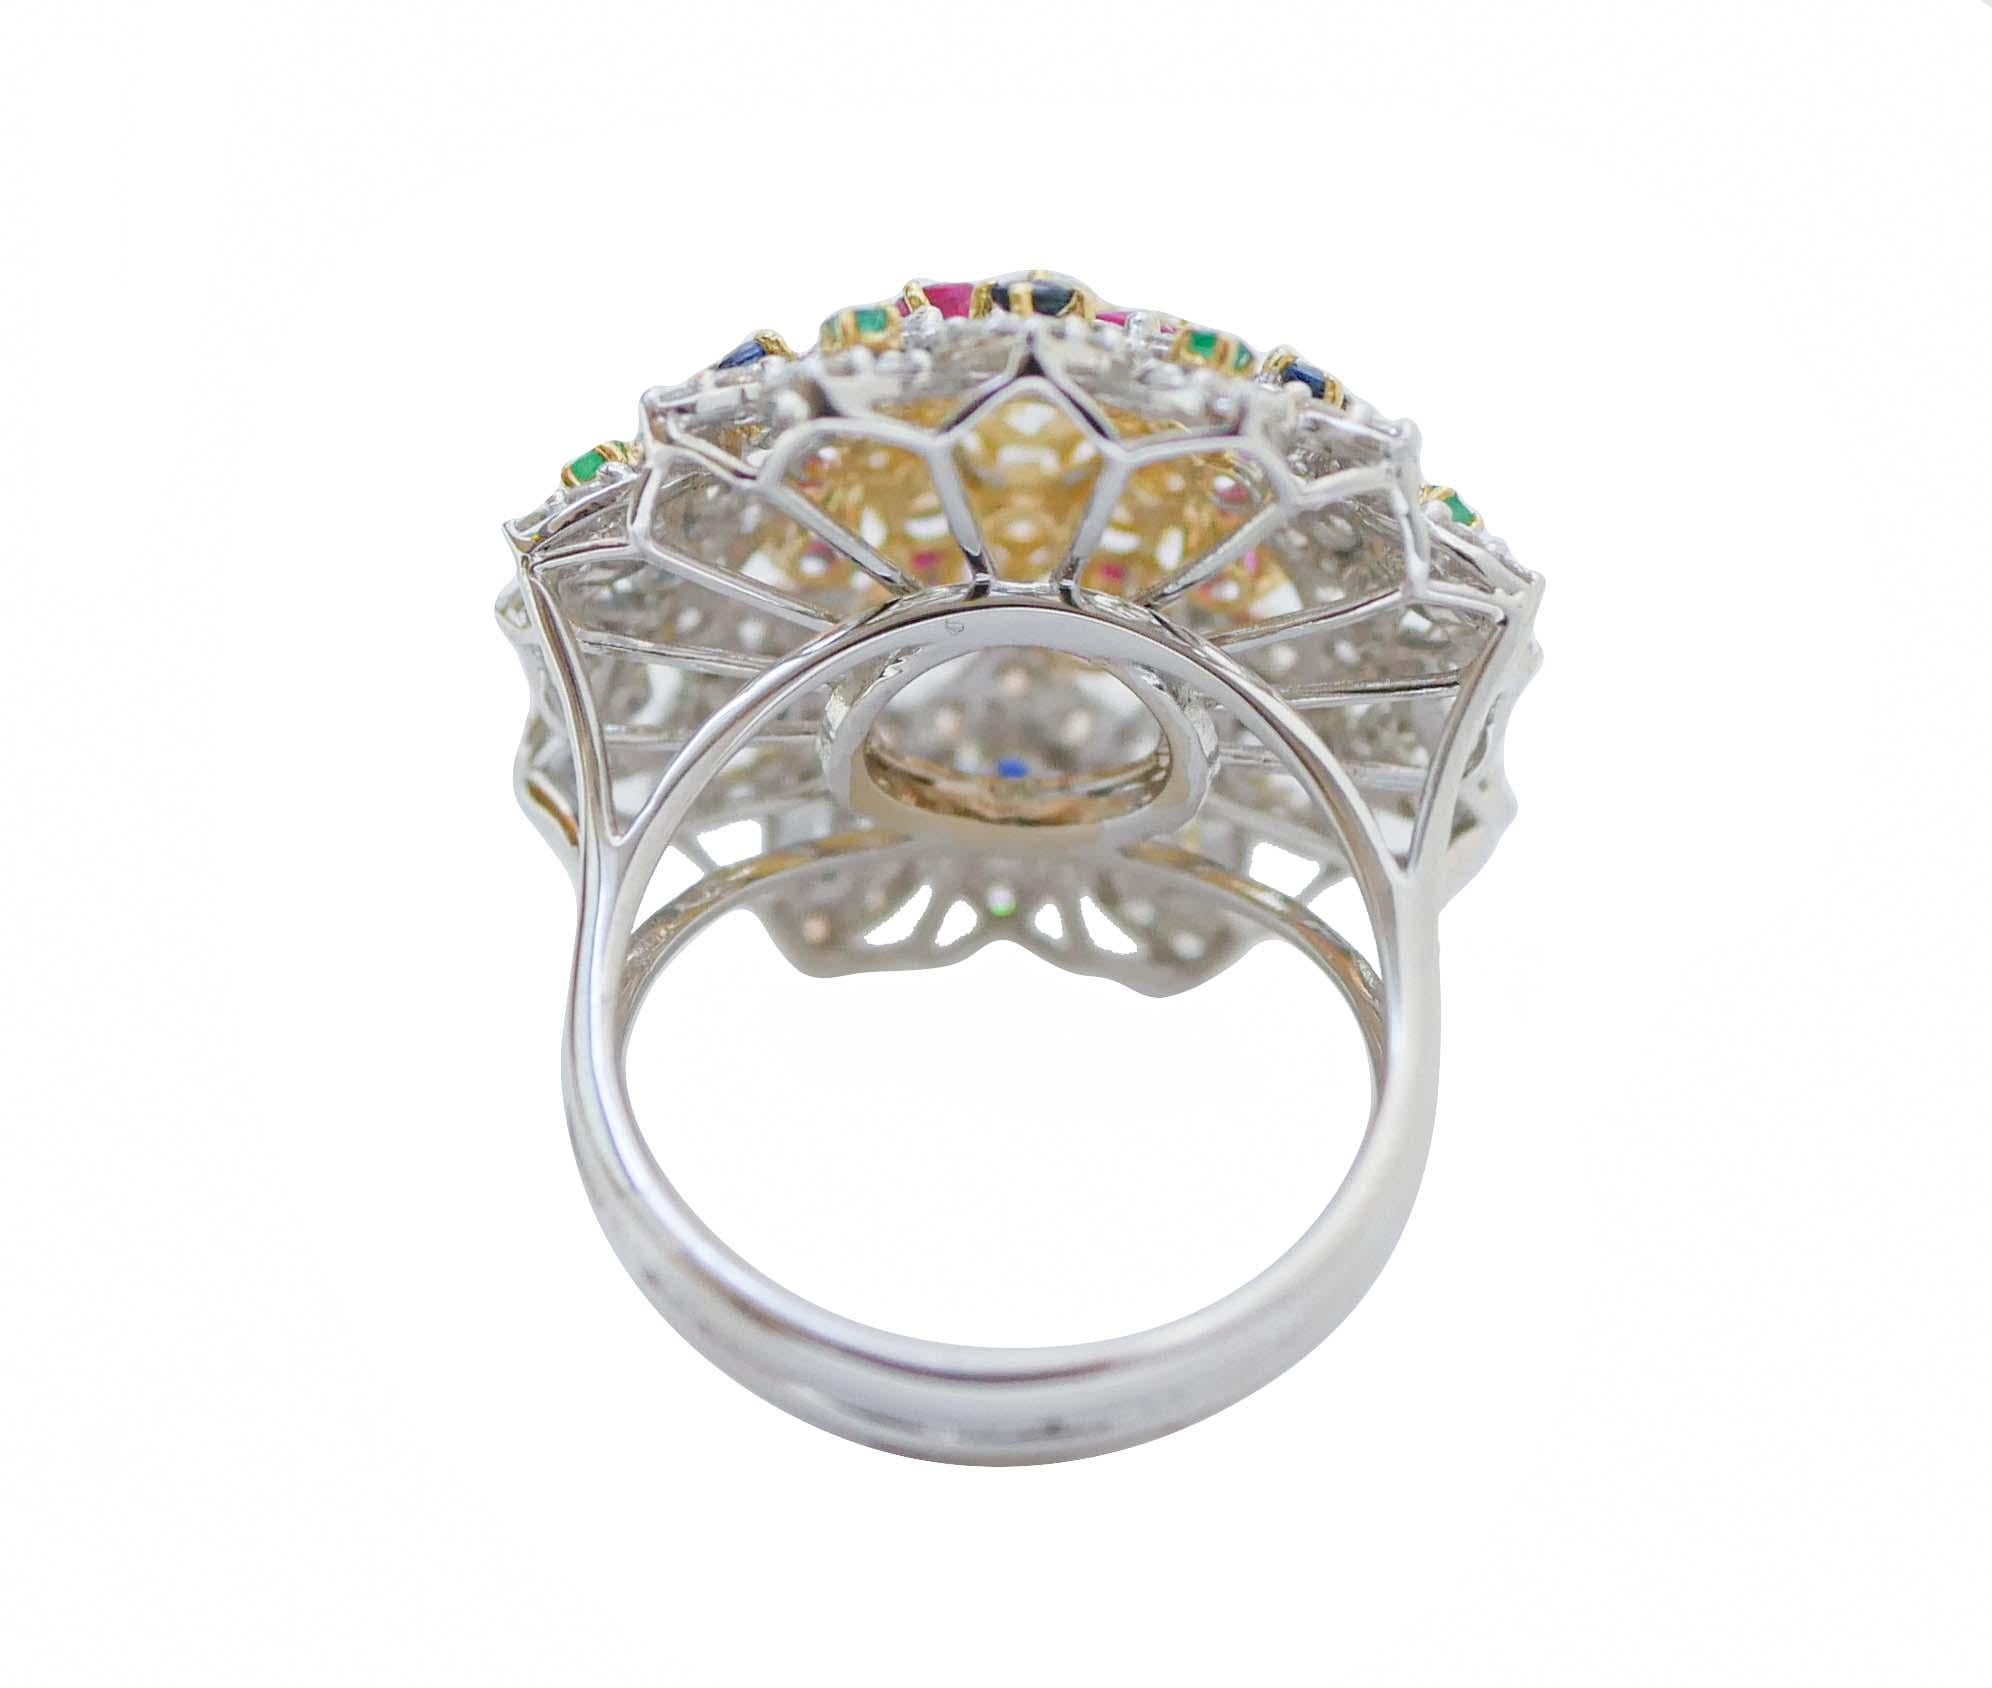 Retro Sapphires, Rubies, Emeralds, Diamonds, 18 Karat White Gold Ring. For Sale